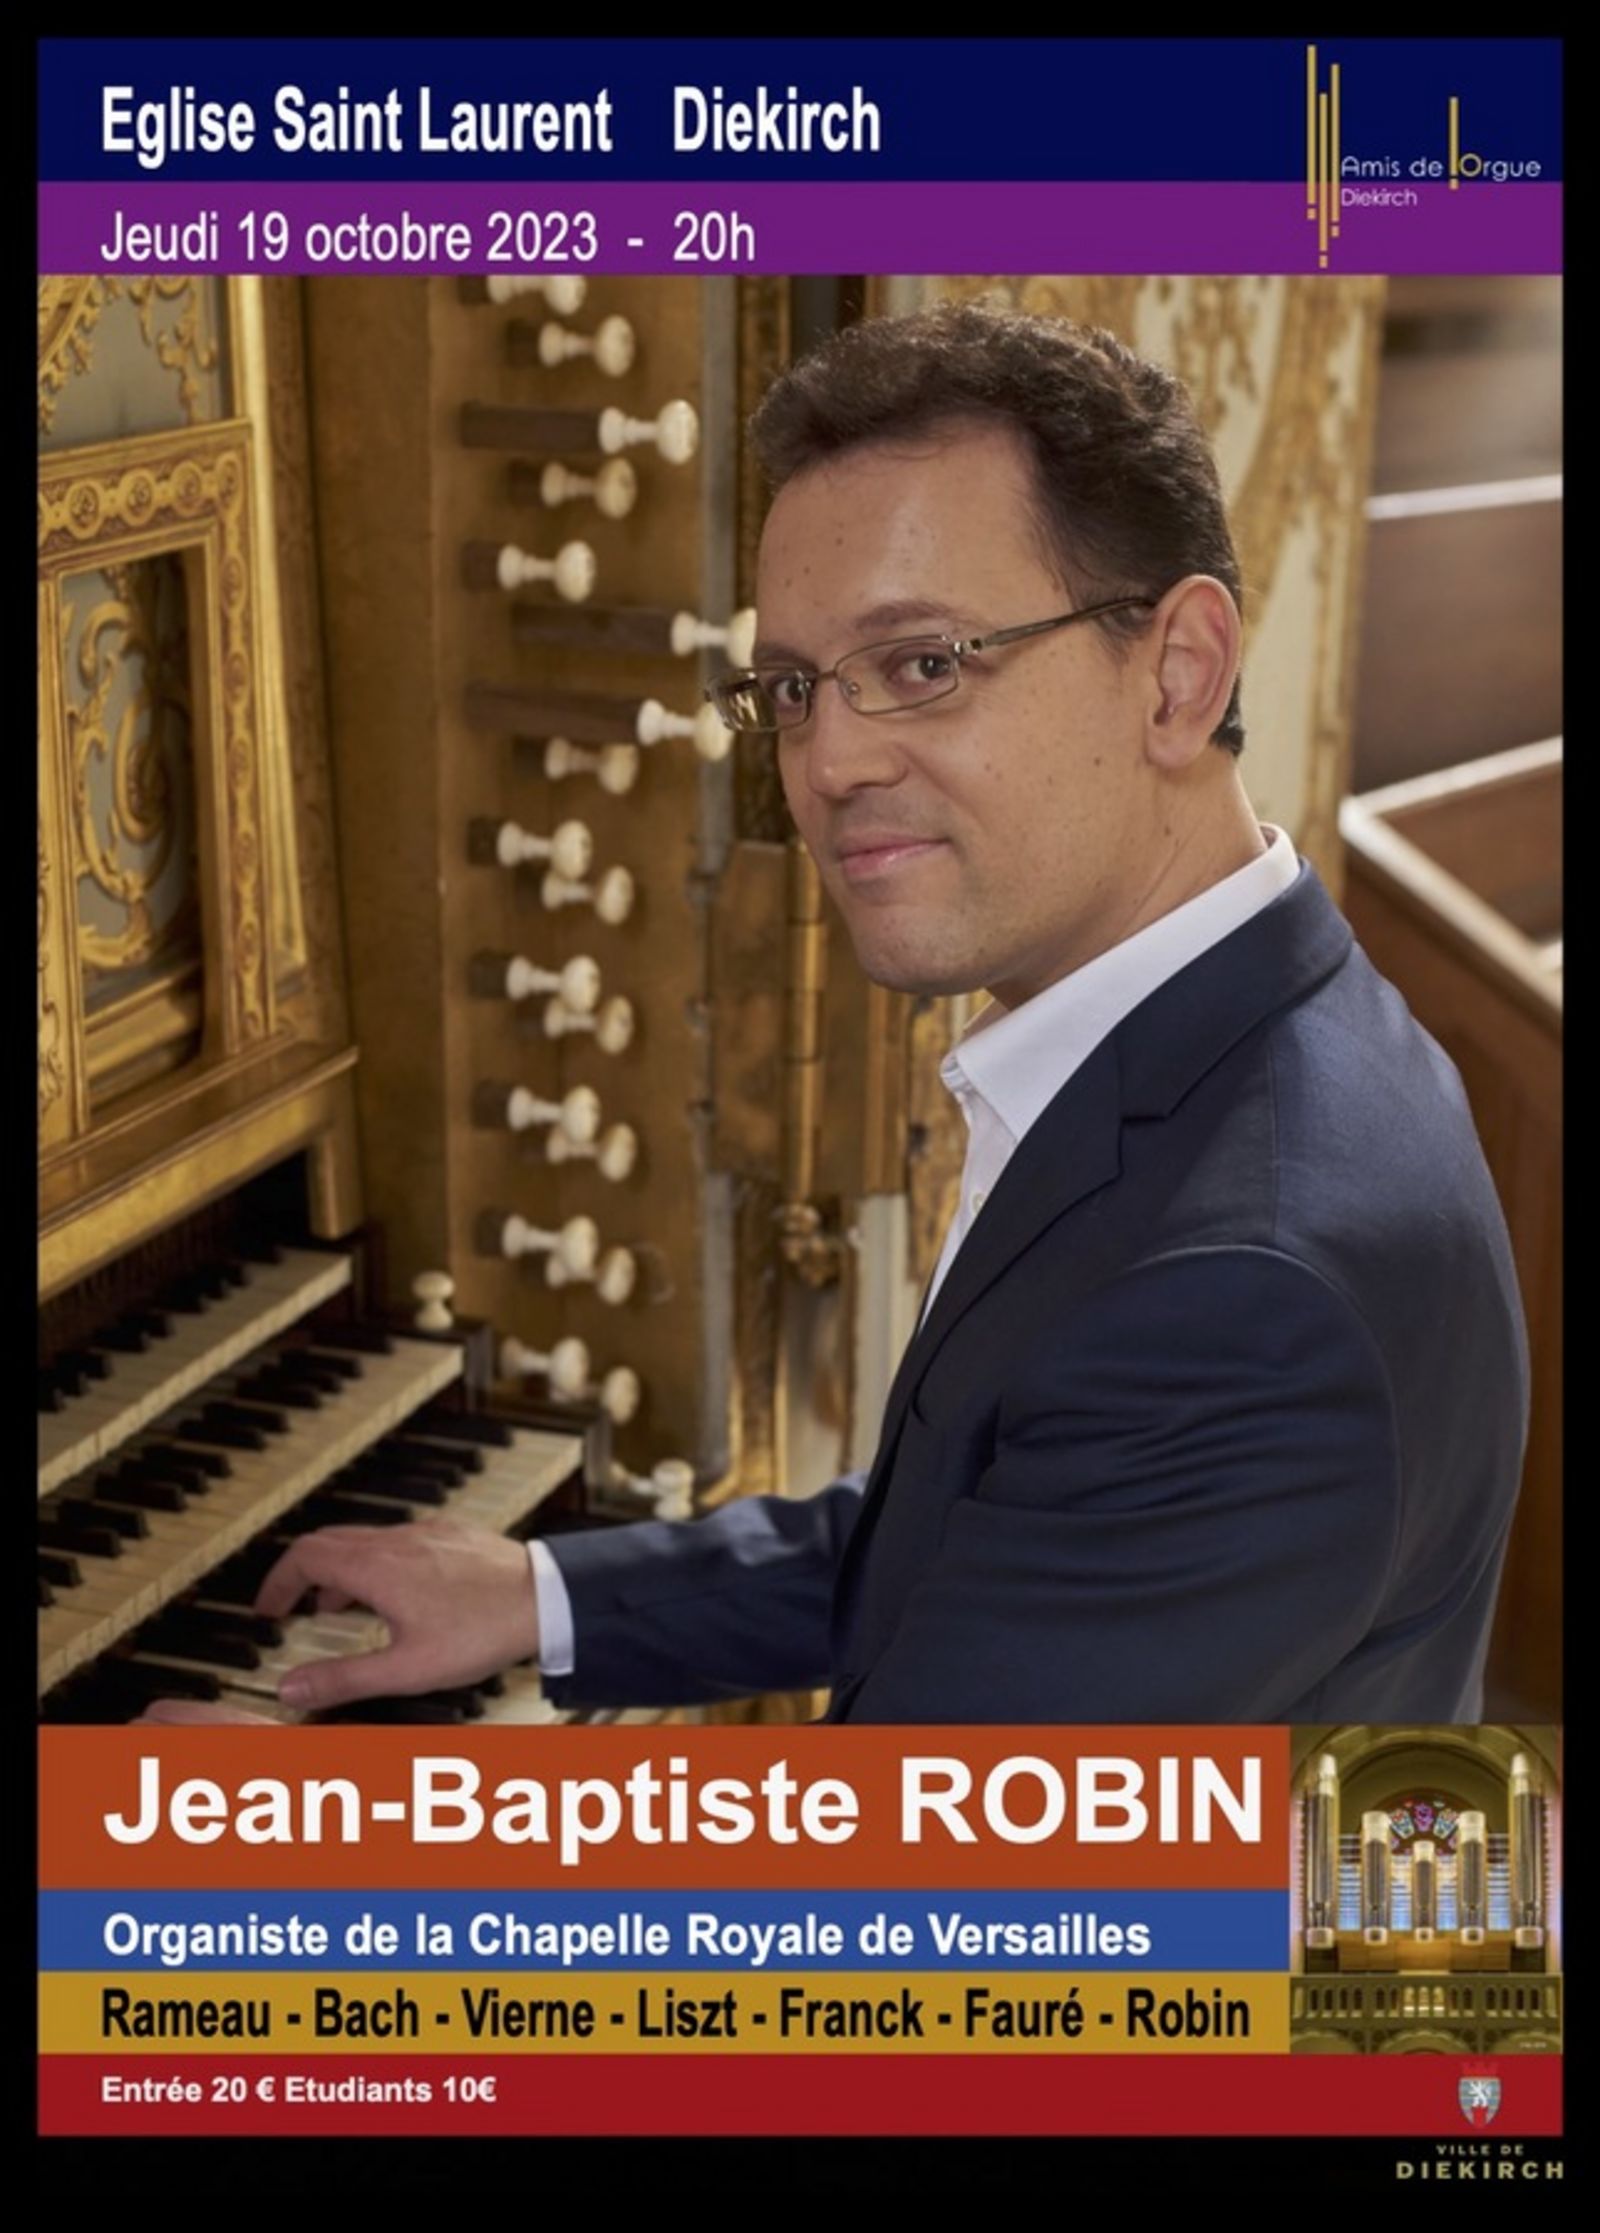 Recital d'orgue par Jean-Baptiste robin